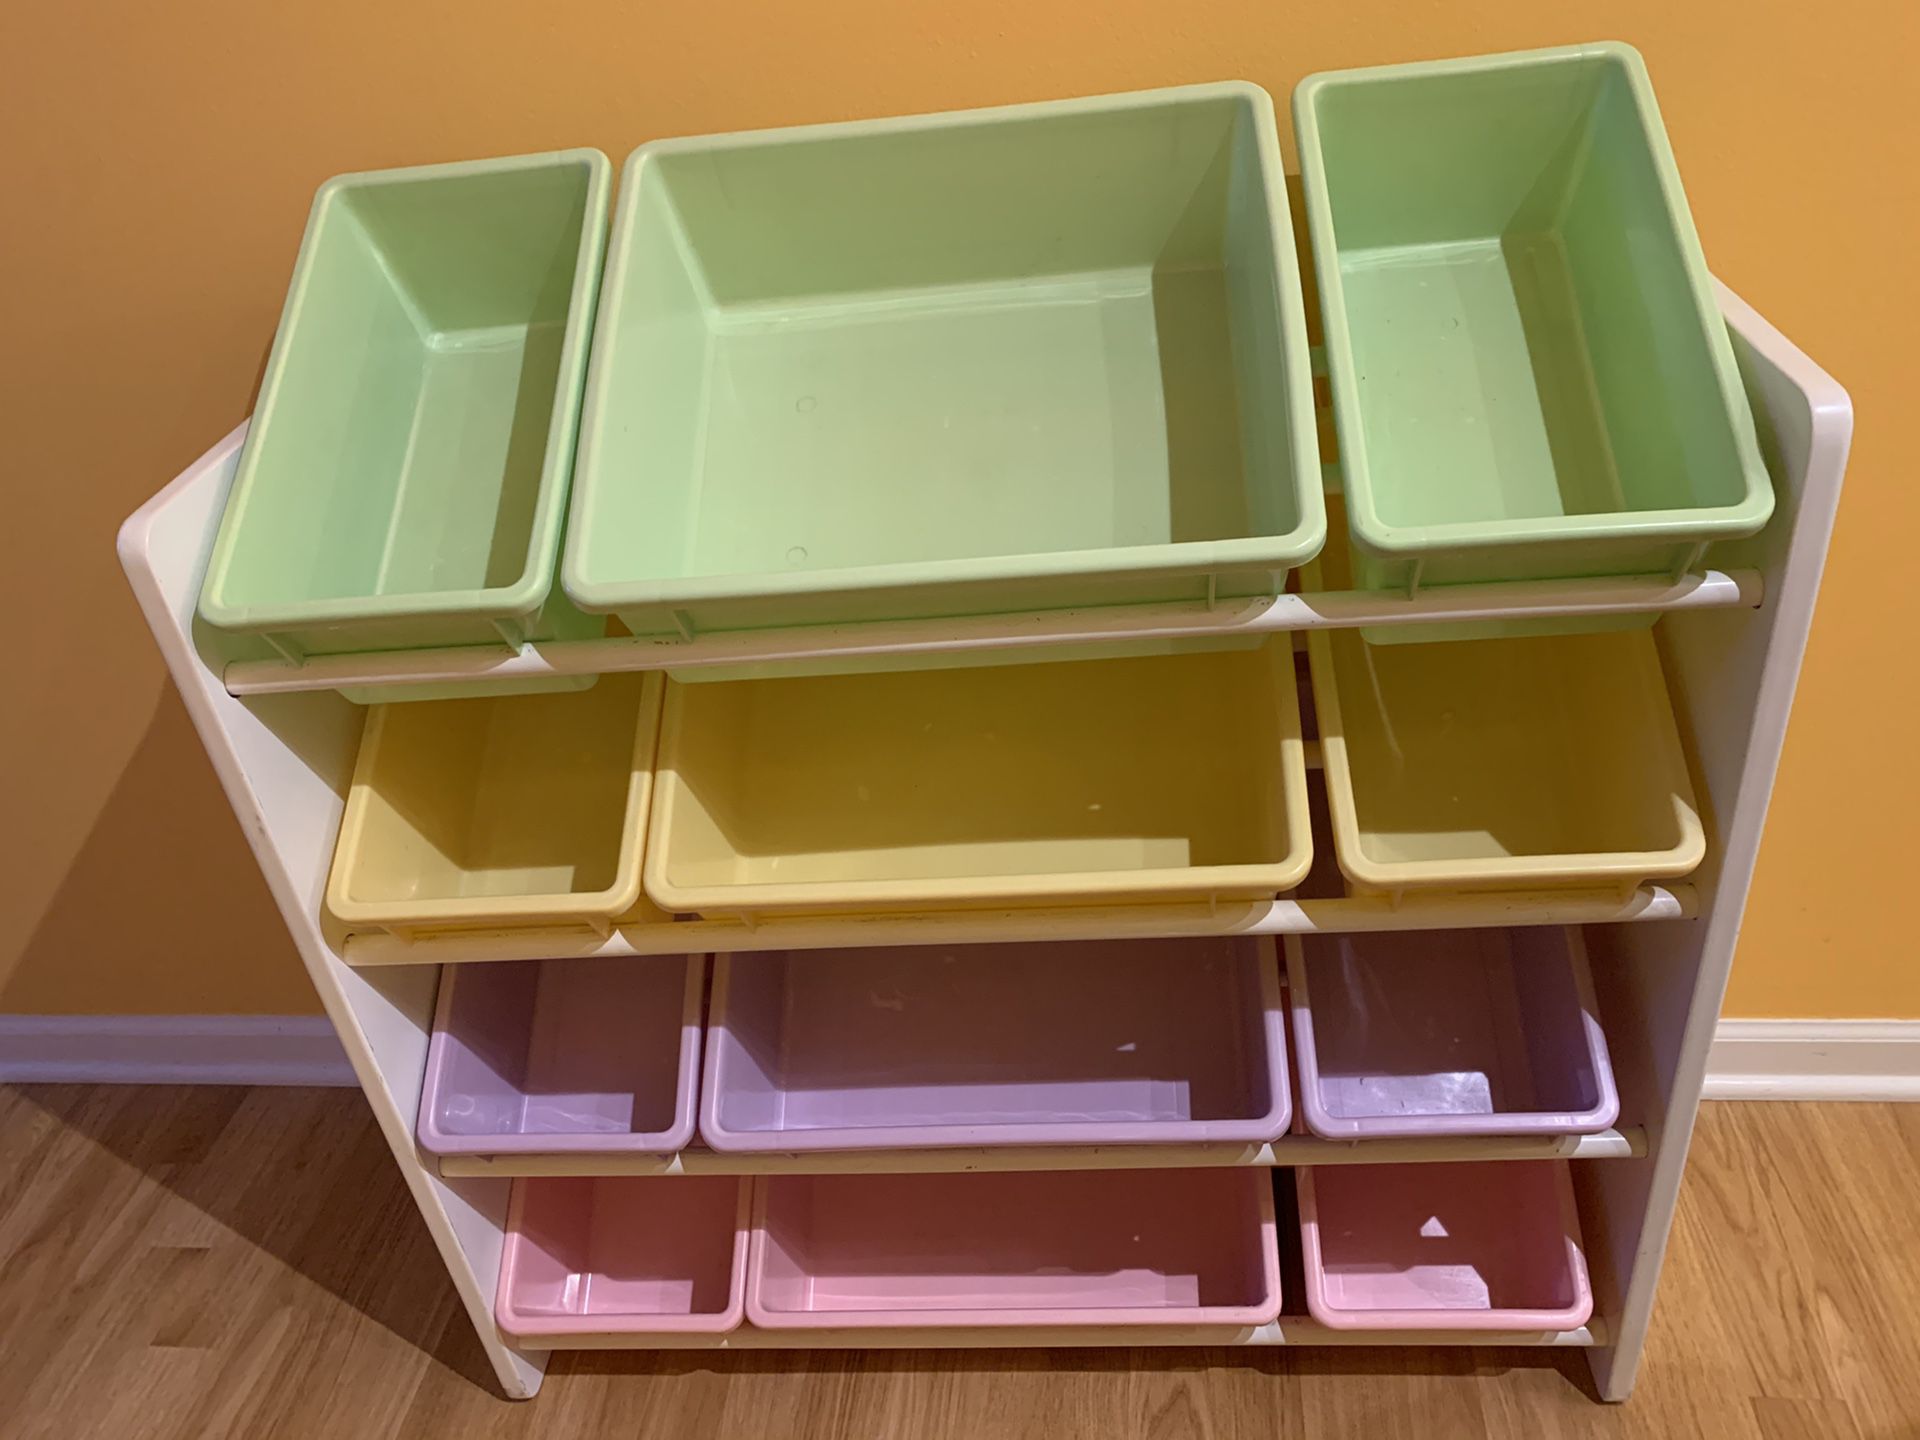 Toy Bin Storage Organizer for Kids